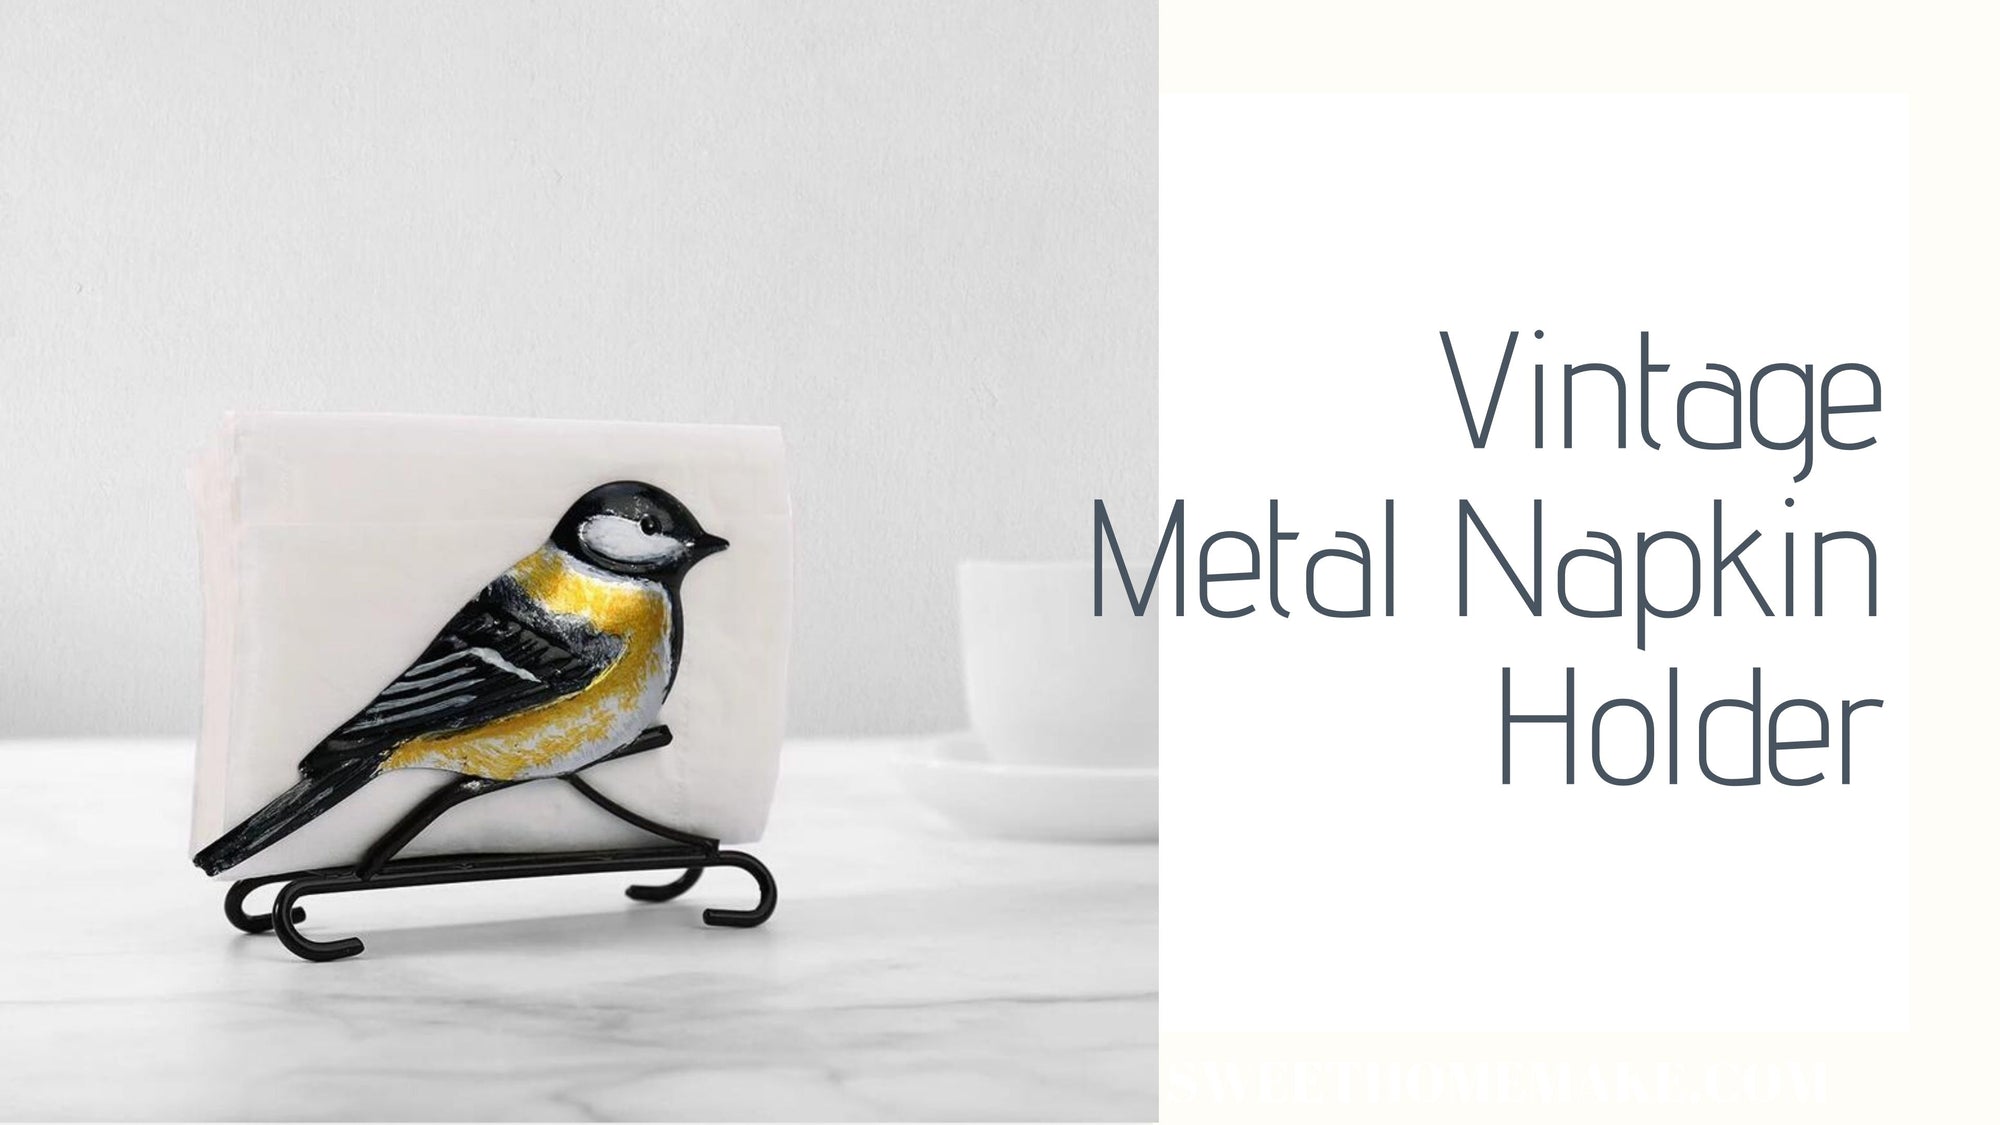 Vintage Metal Napkin Holder with Bird Figurine Ornament